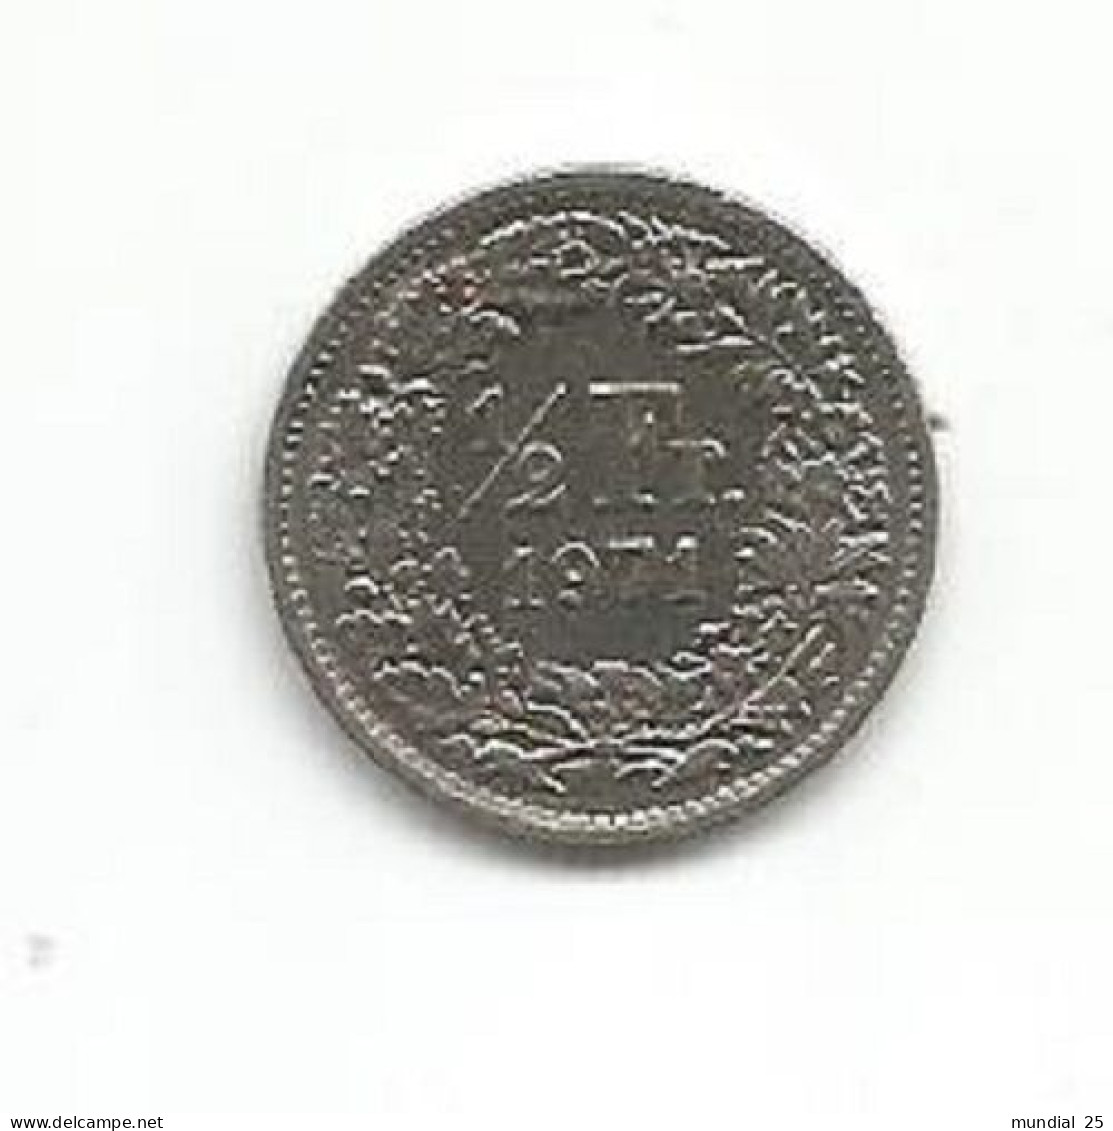 SWITZERLAND 1/2 FRANC 1971 - 1/2 Franc